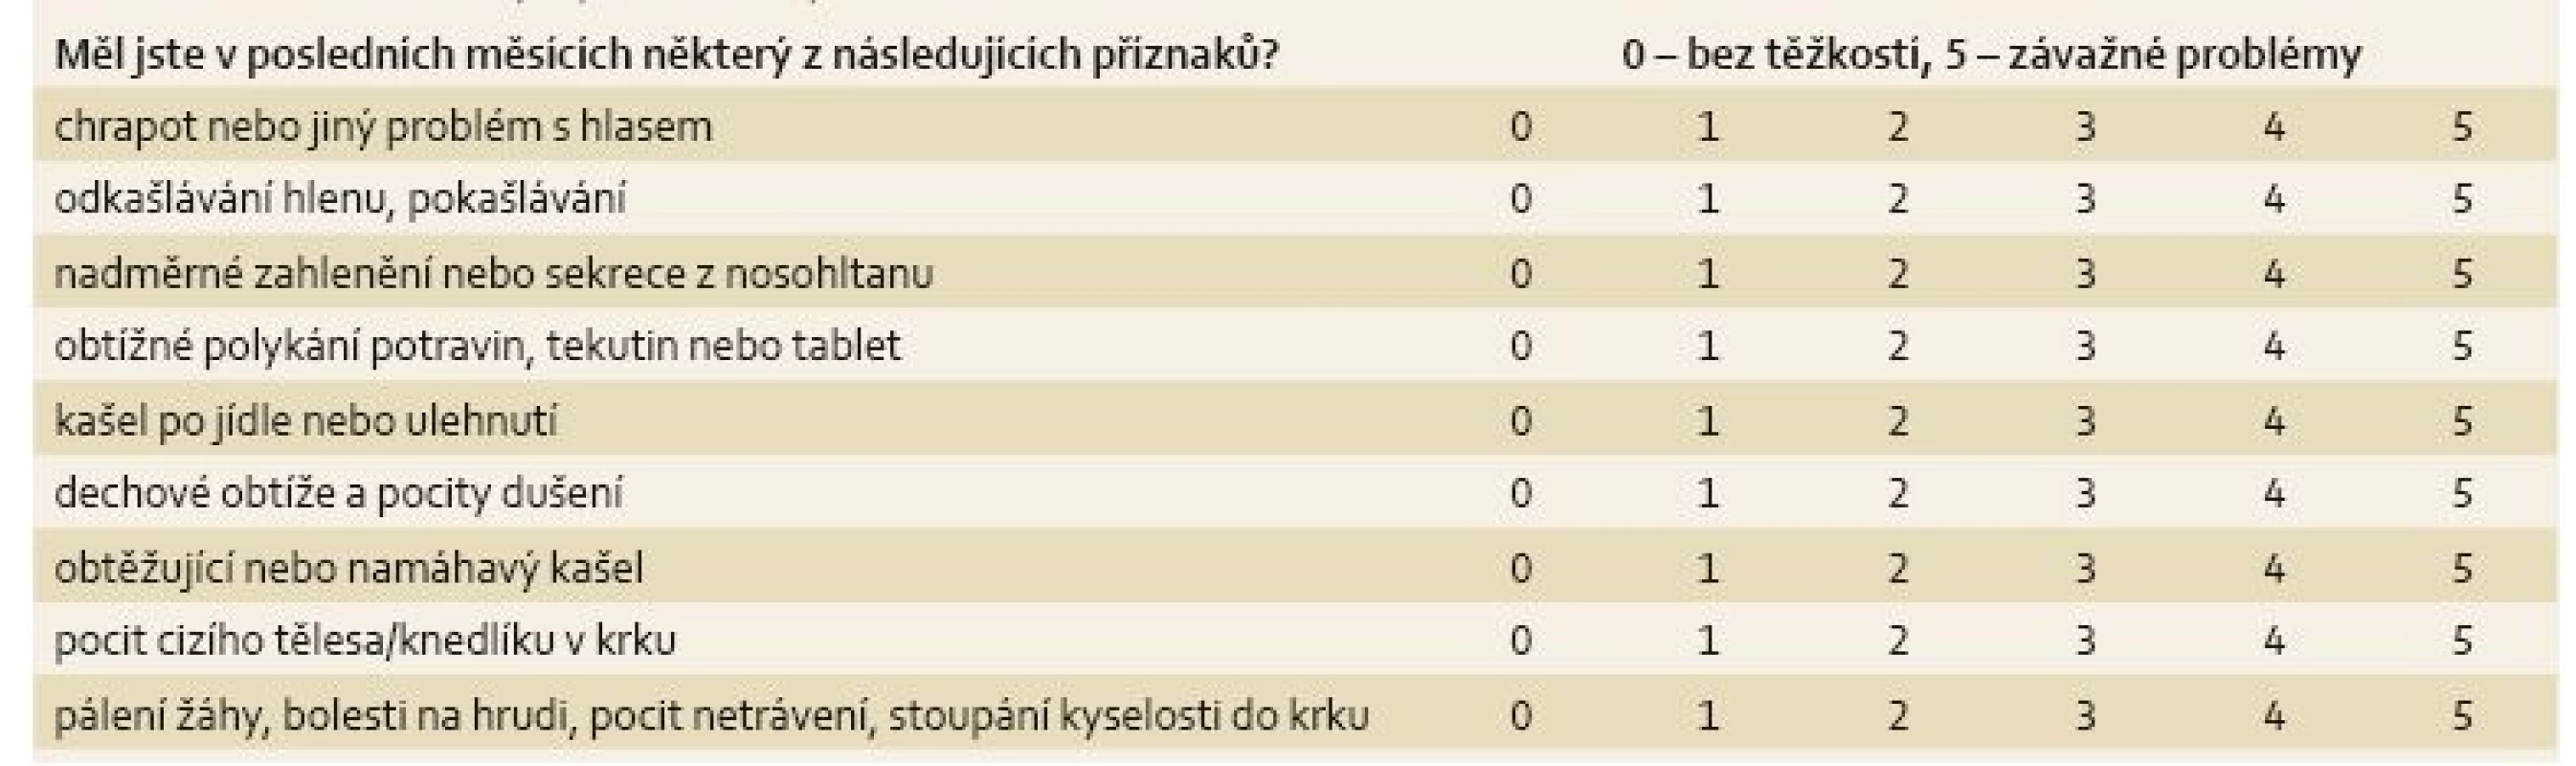 Index symptomů refluxu. Převzato z [25].
Tab. 2. Index of reflux symptoms. Adapted from [25].